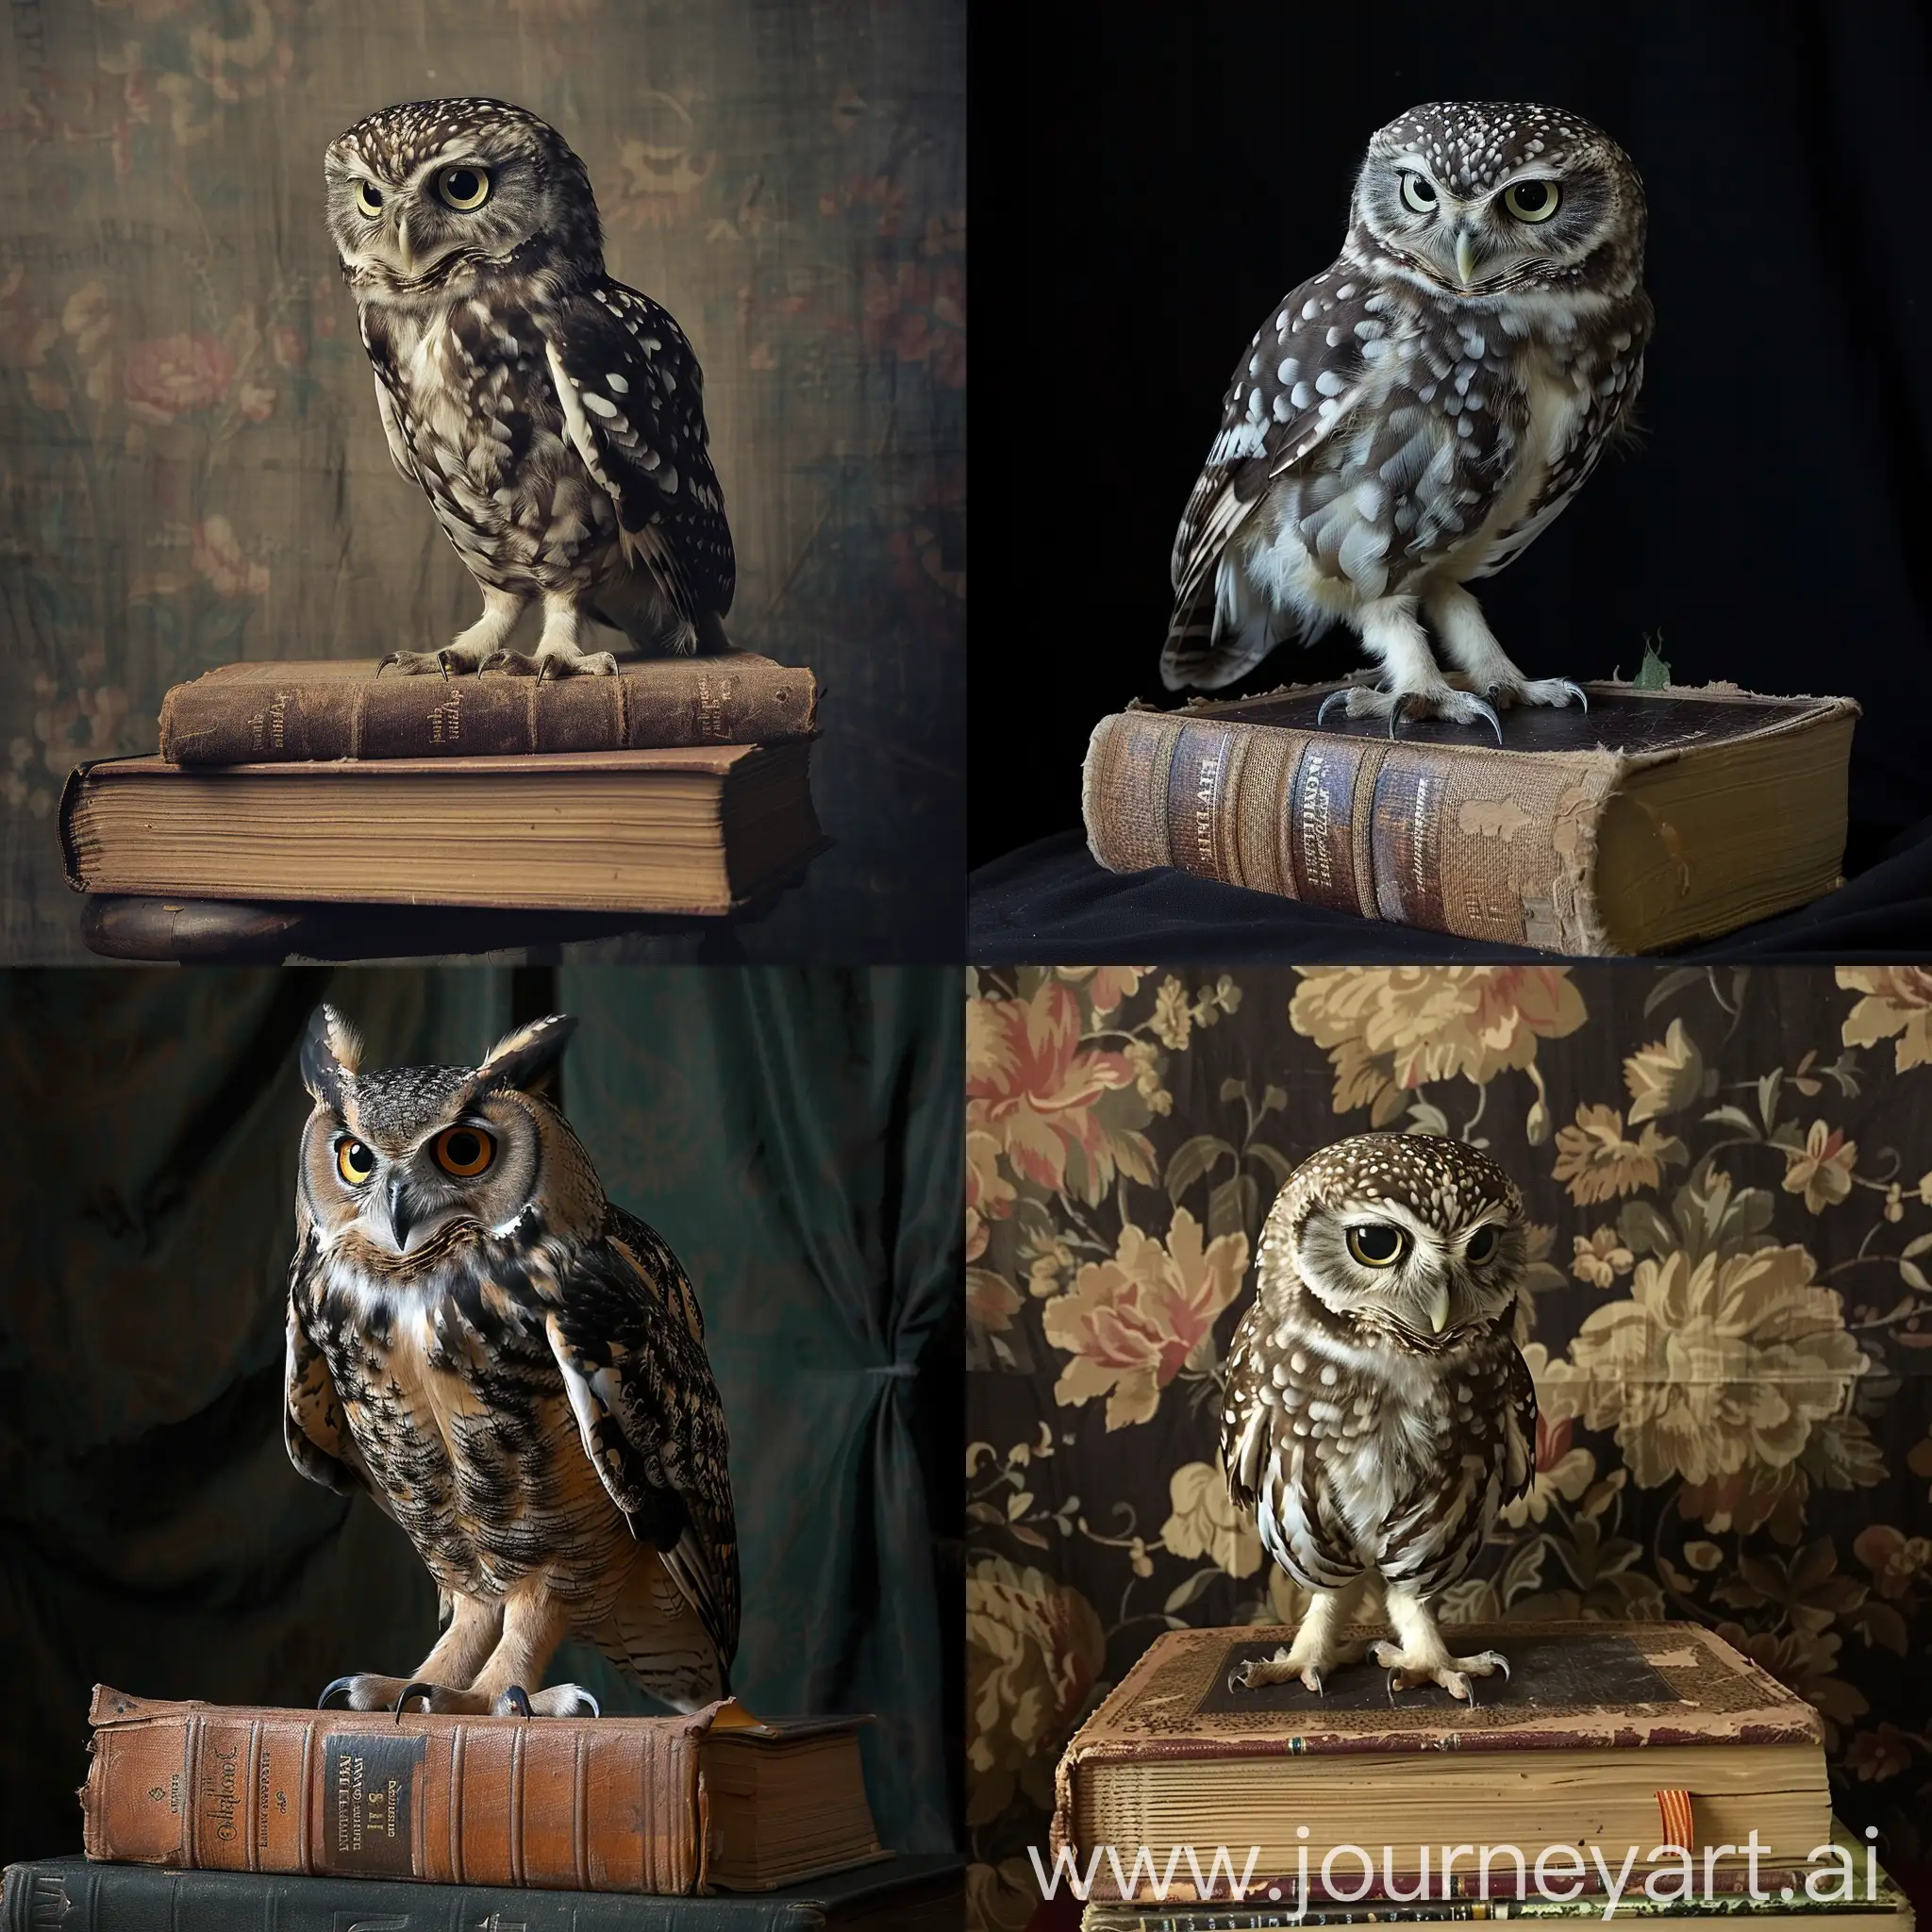 An owl standing on a book